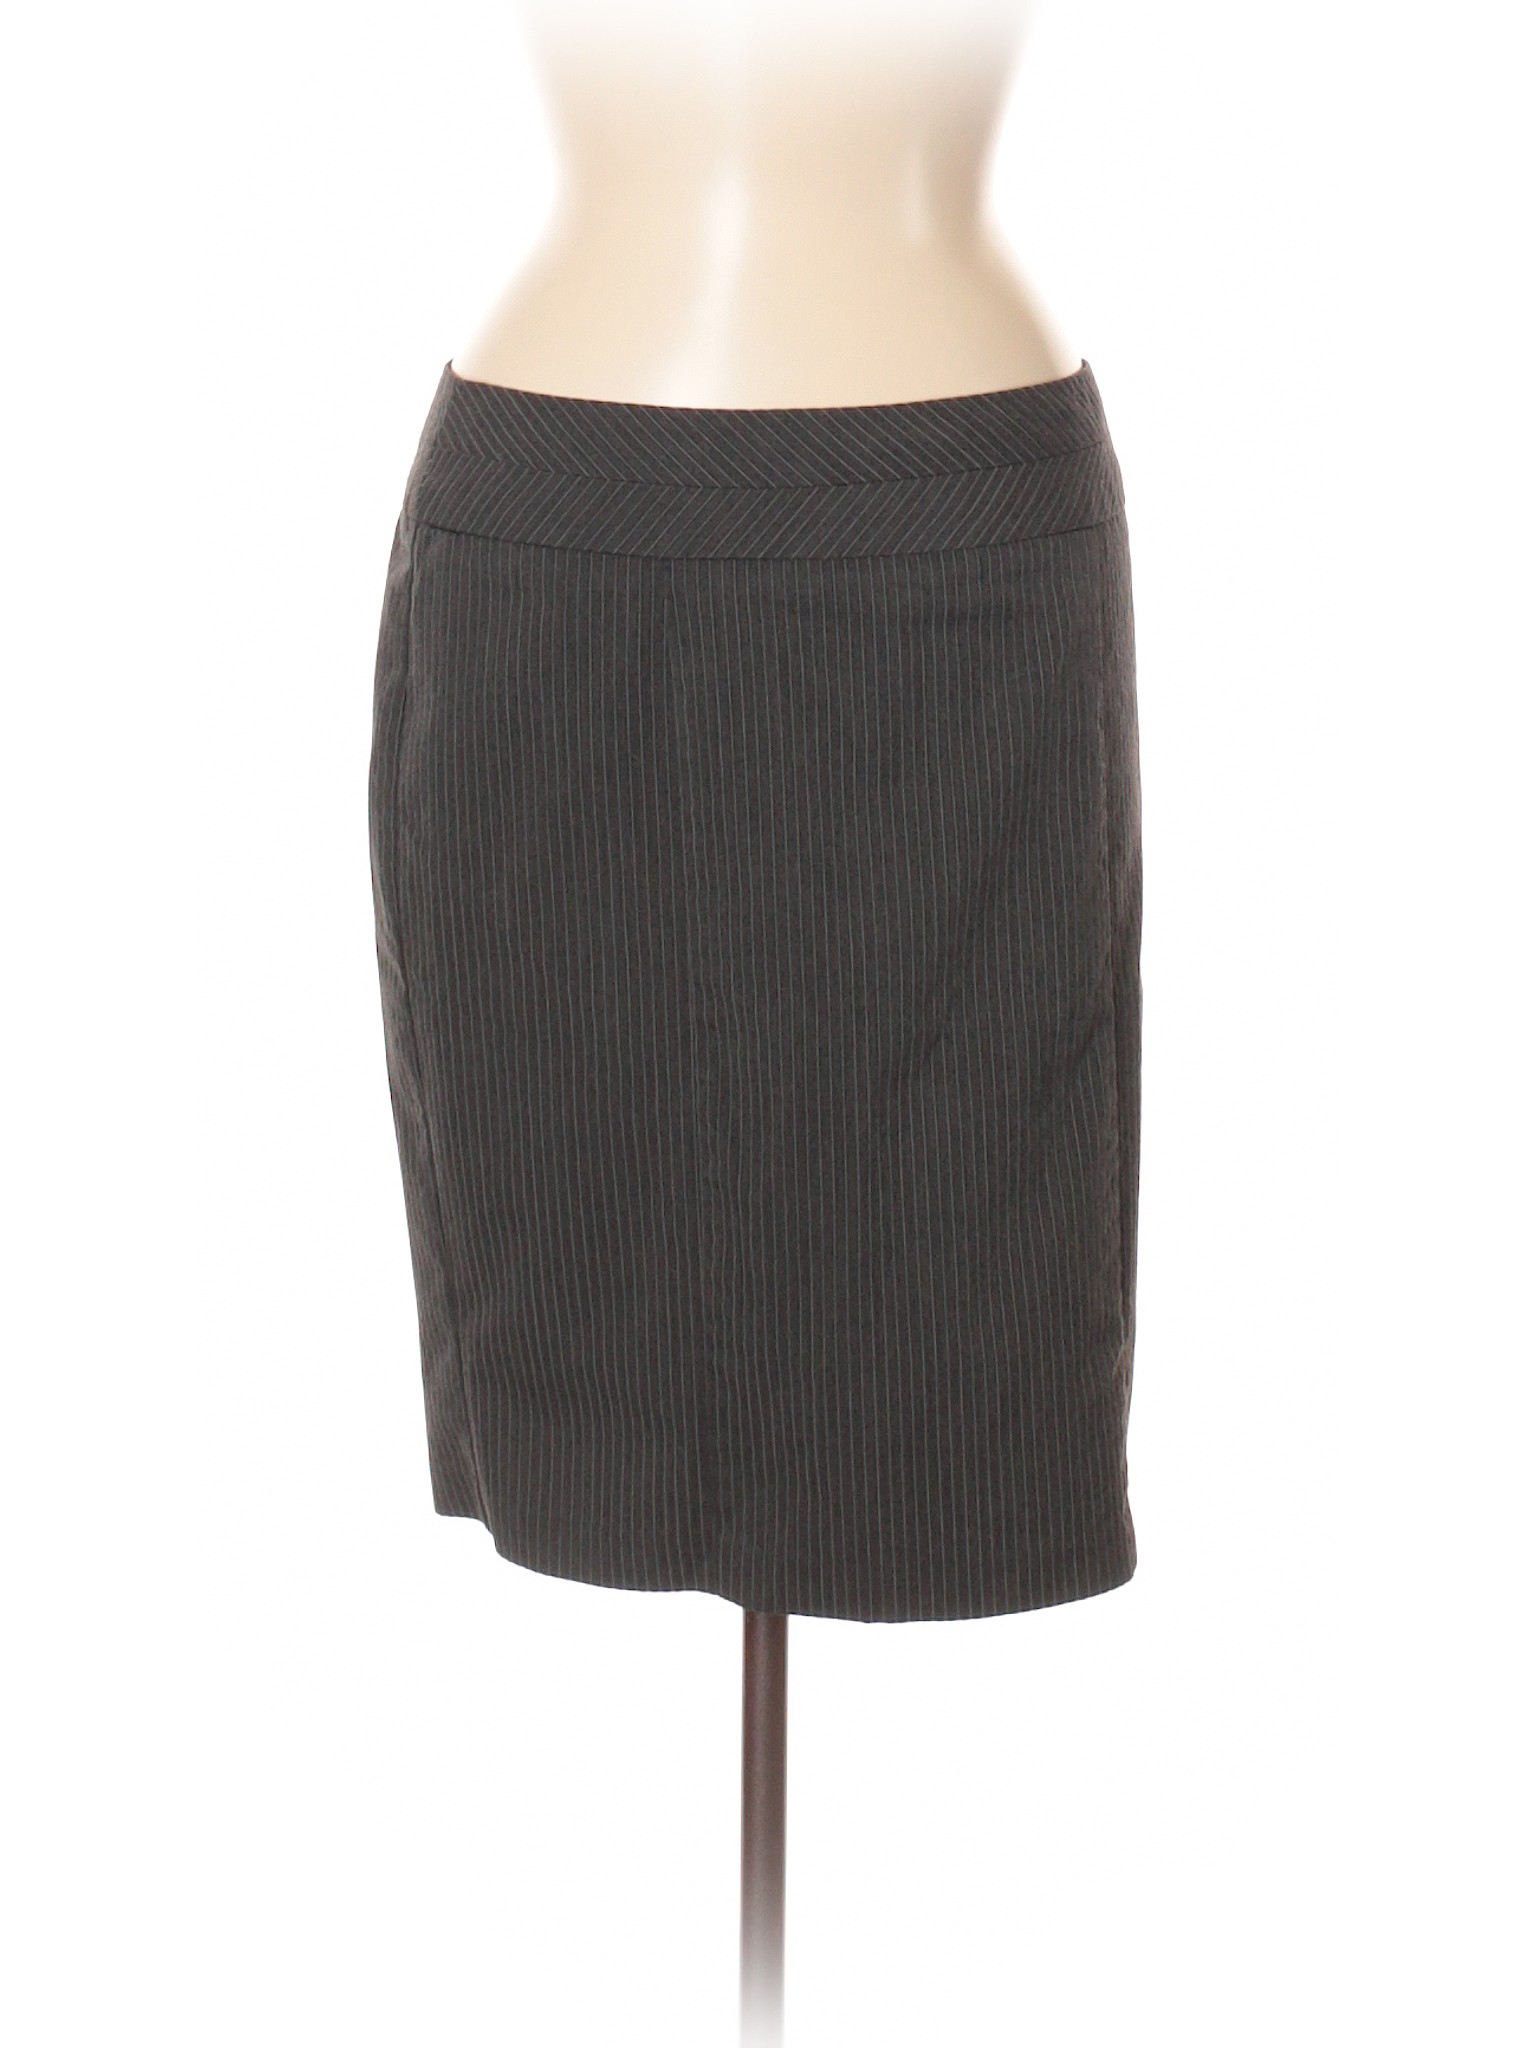 SOHO Apparel Ltd Stripes Gray Casual Skirt Size 6 - 88% off | thredUP